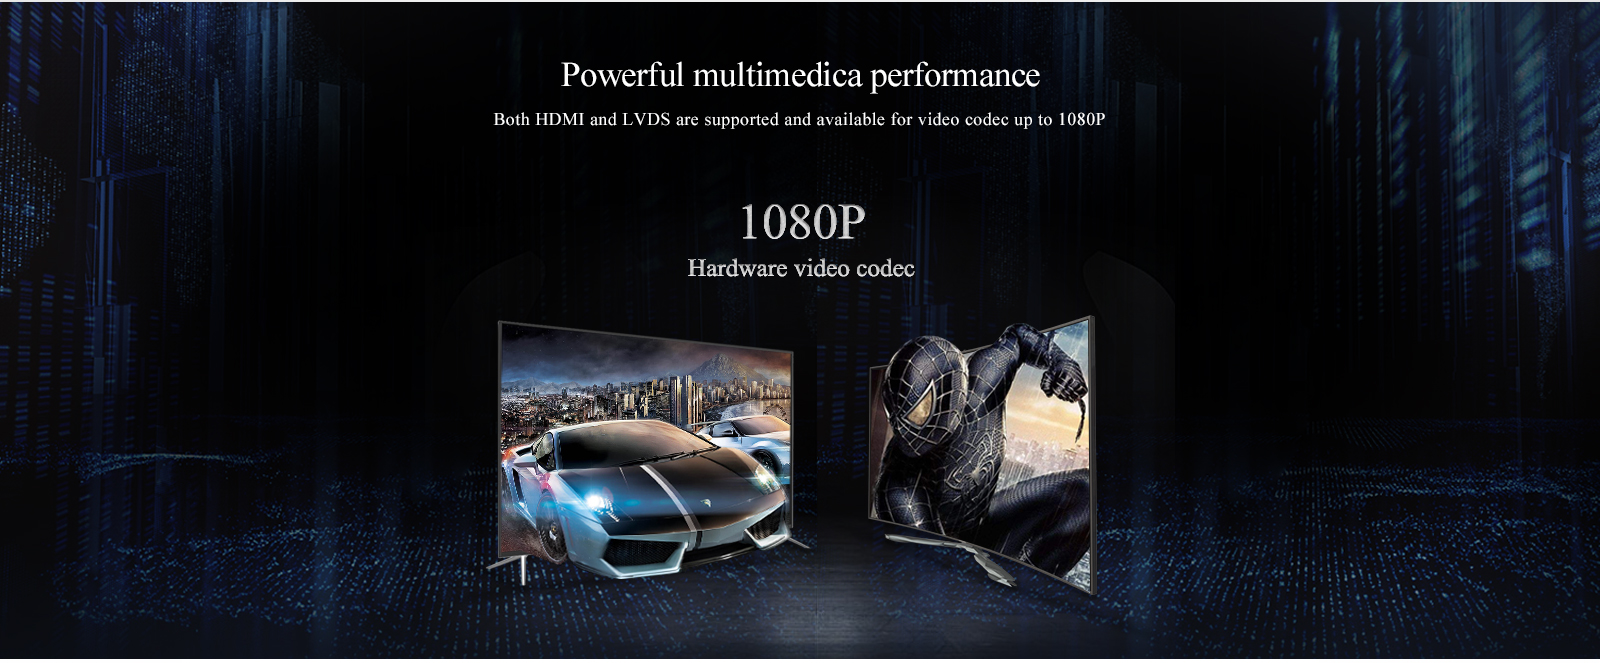 FCU1201 embedded computer Powerful multimedica performance